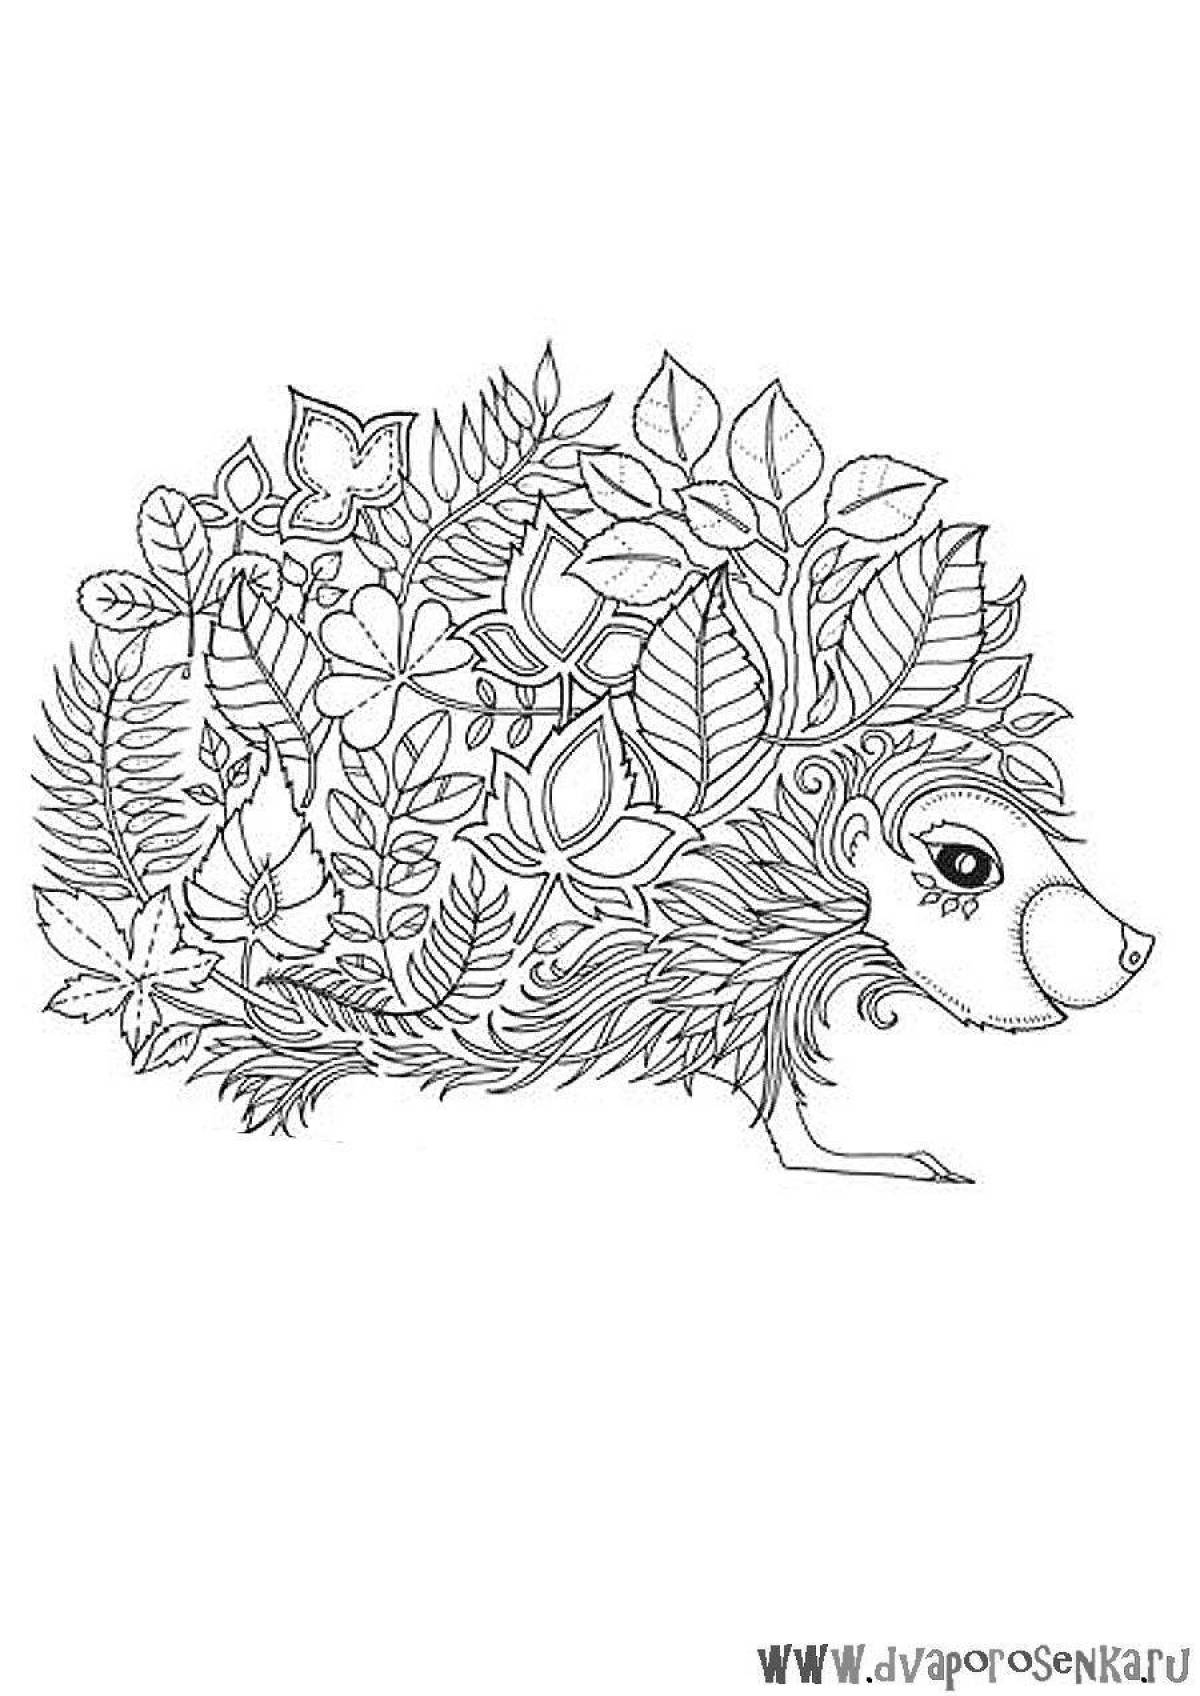 Fantastic anti-stress hedgehog coloring book